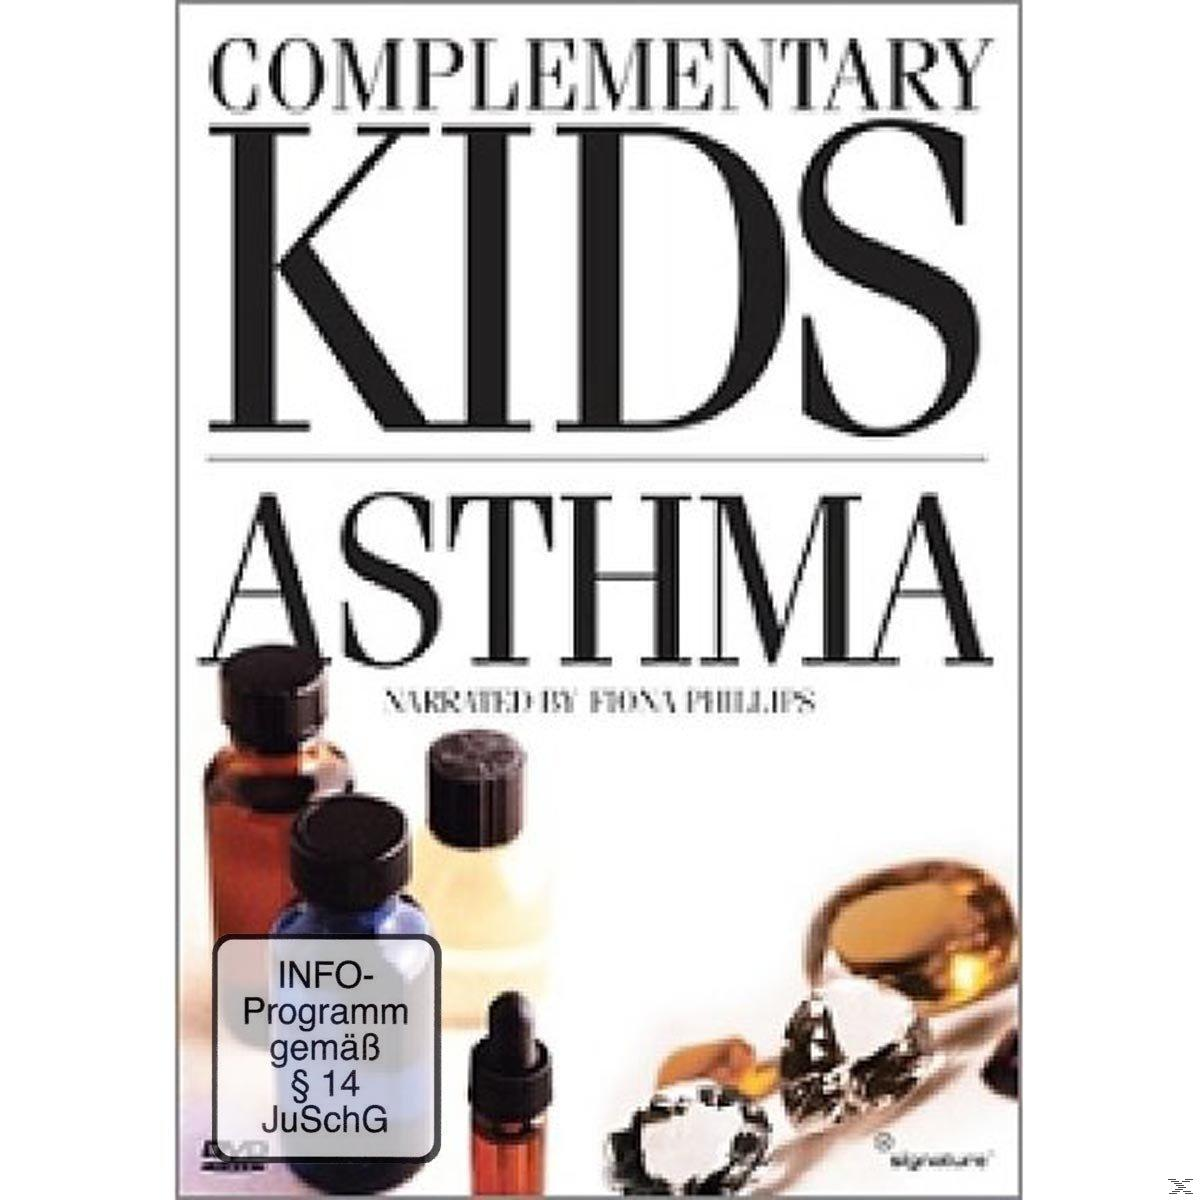 Complementary Kida DVD Asthma